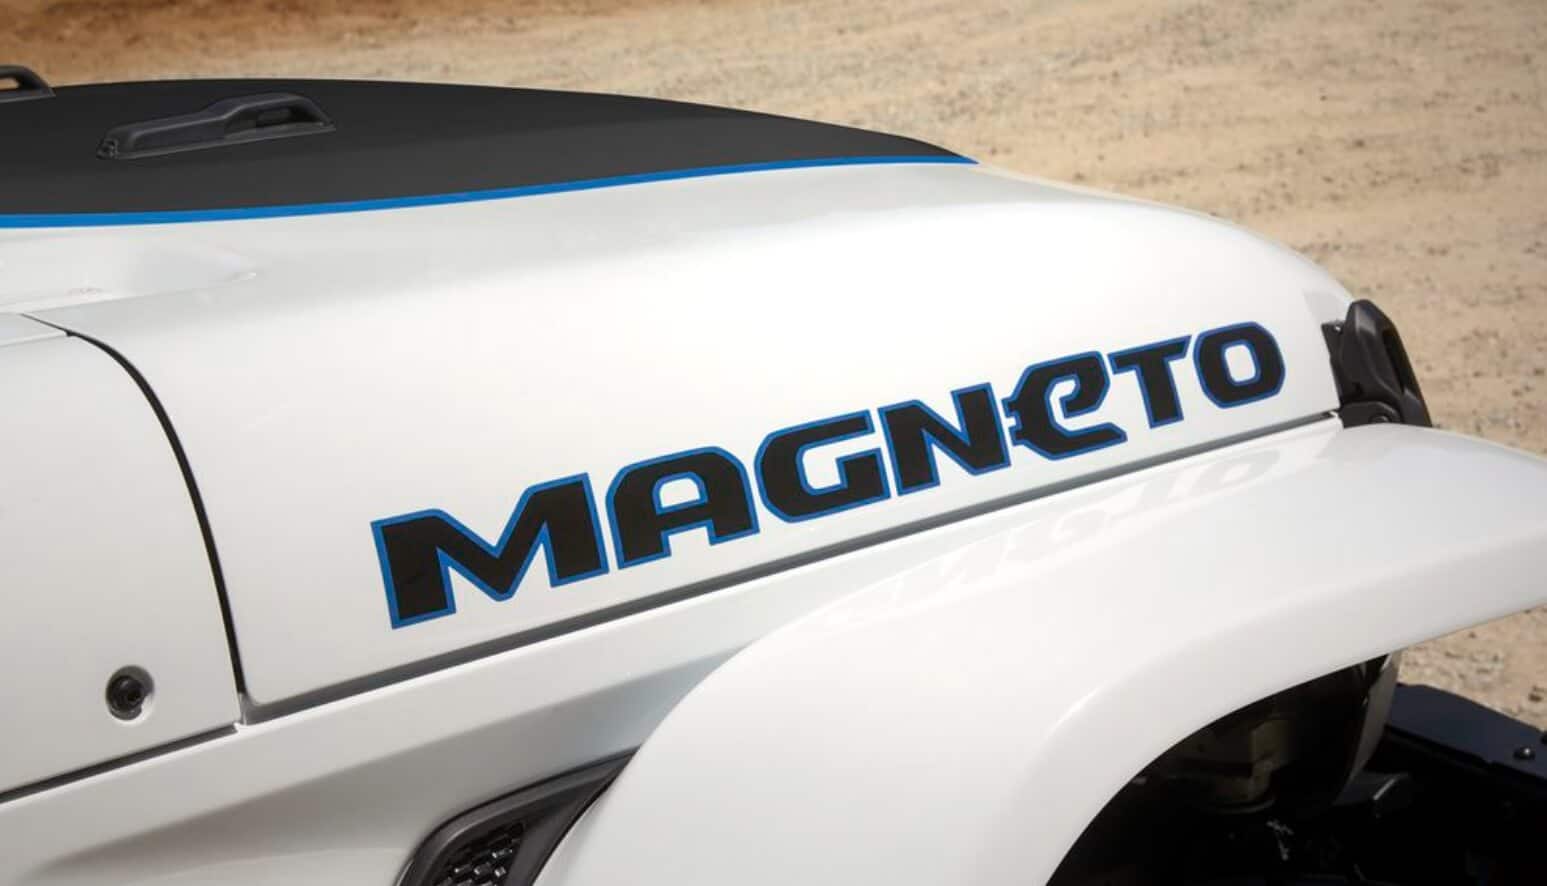 Jeep Wrangler Magneto 2.0 Elektroauto Konzept